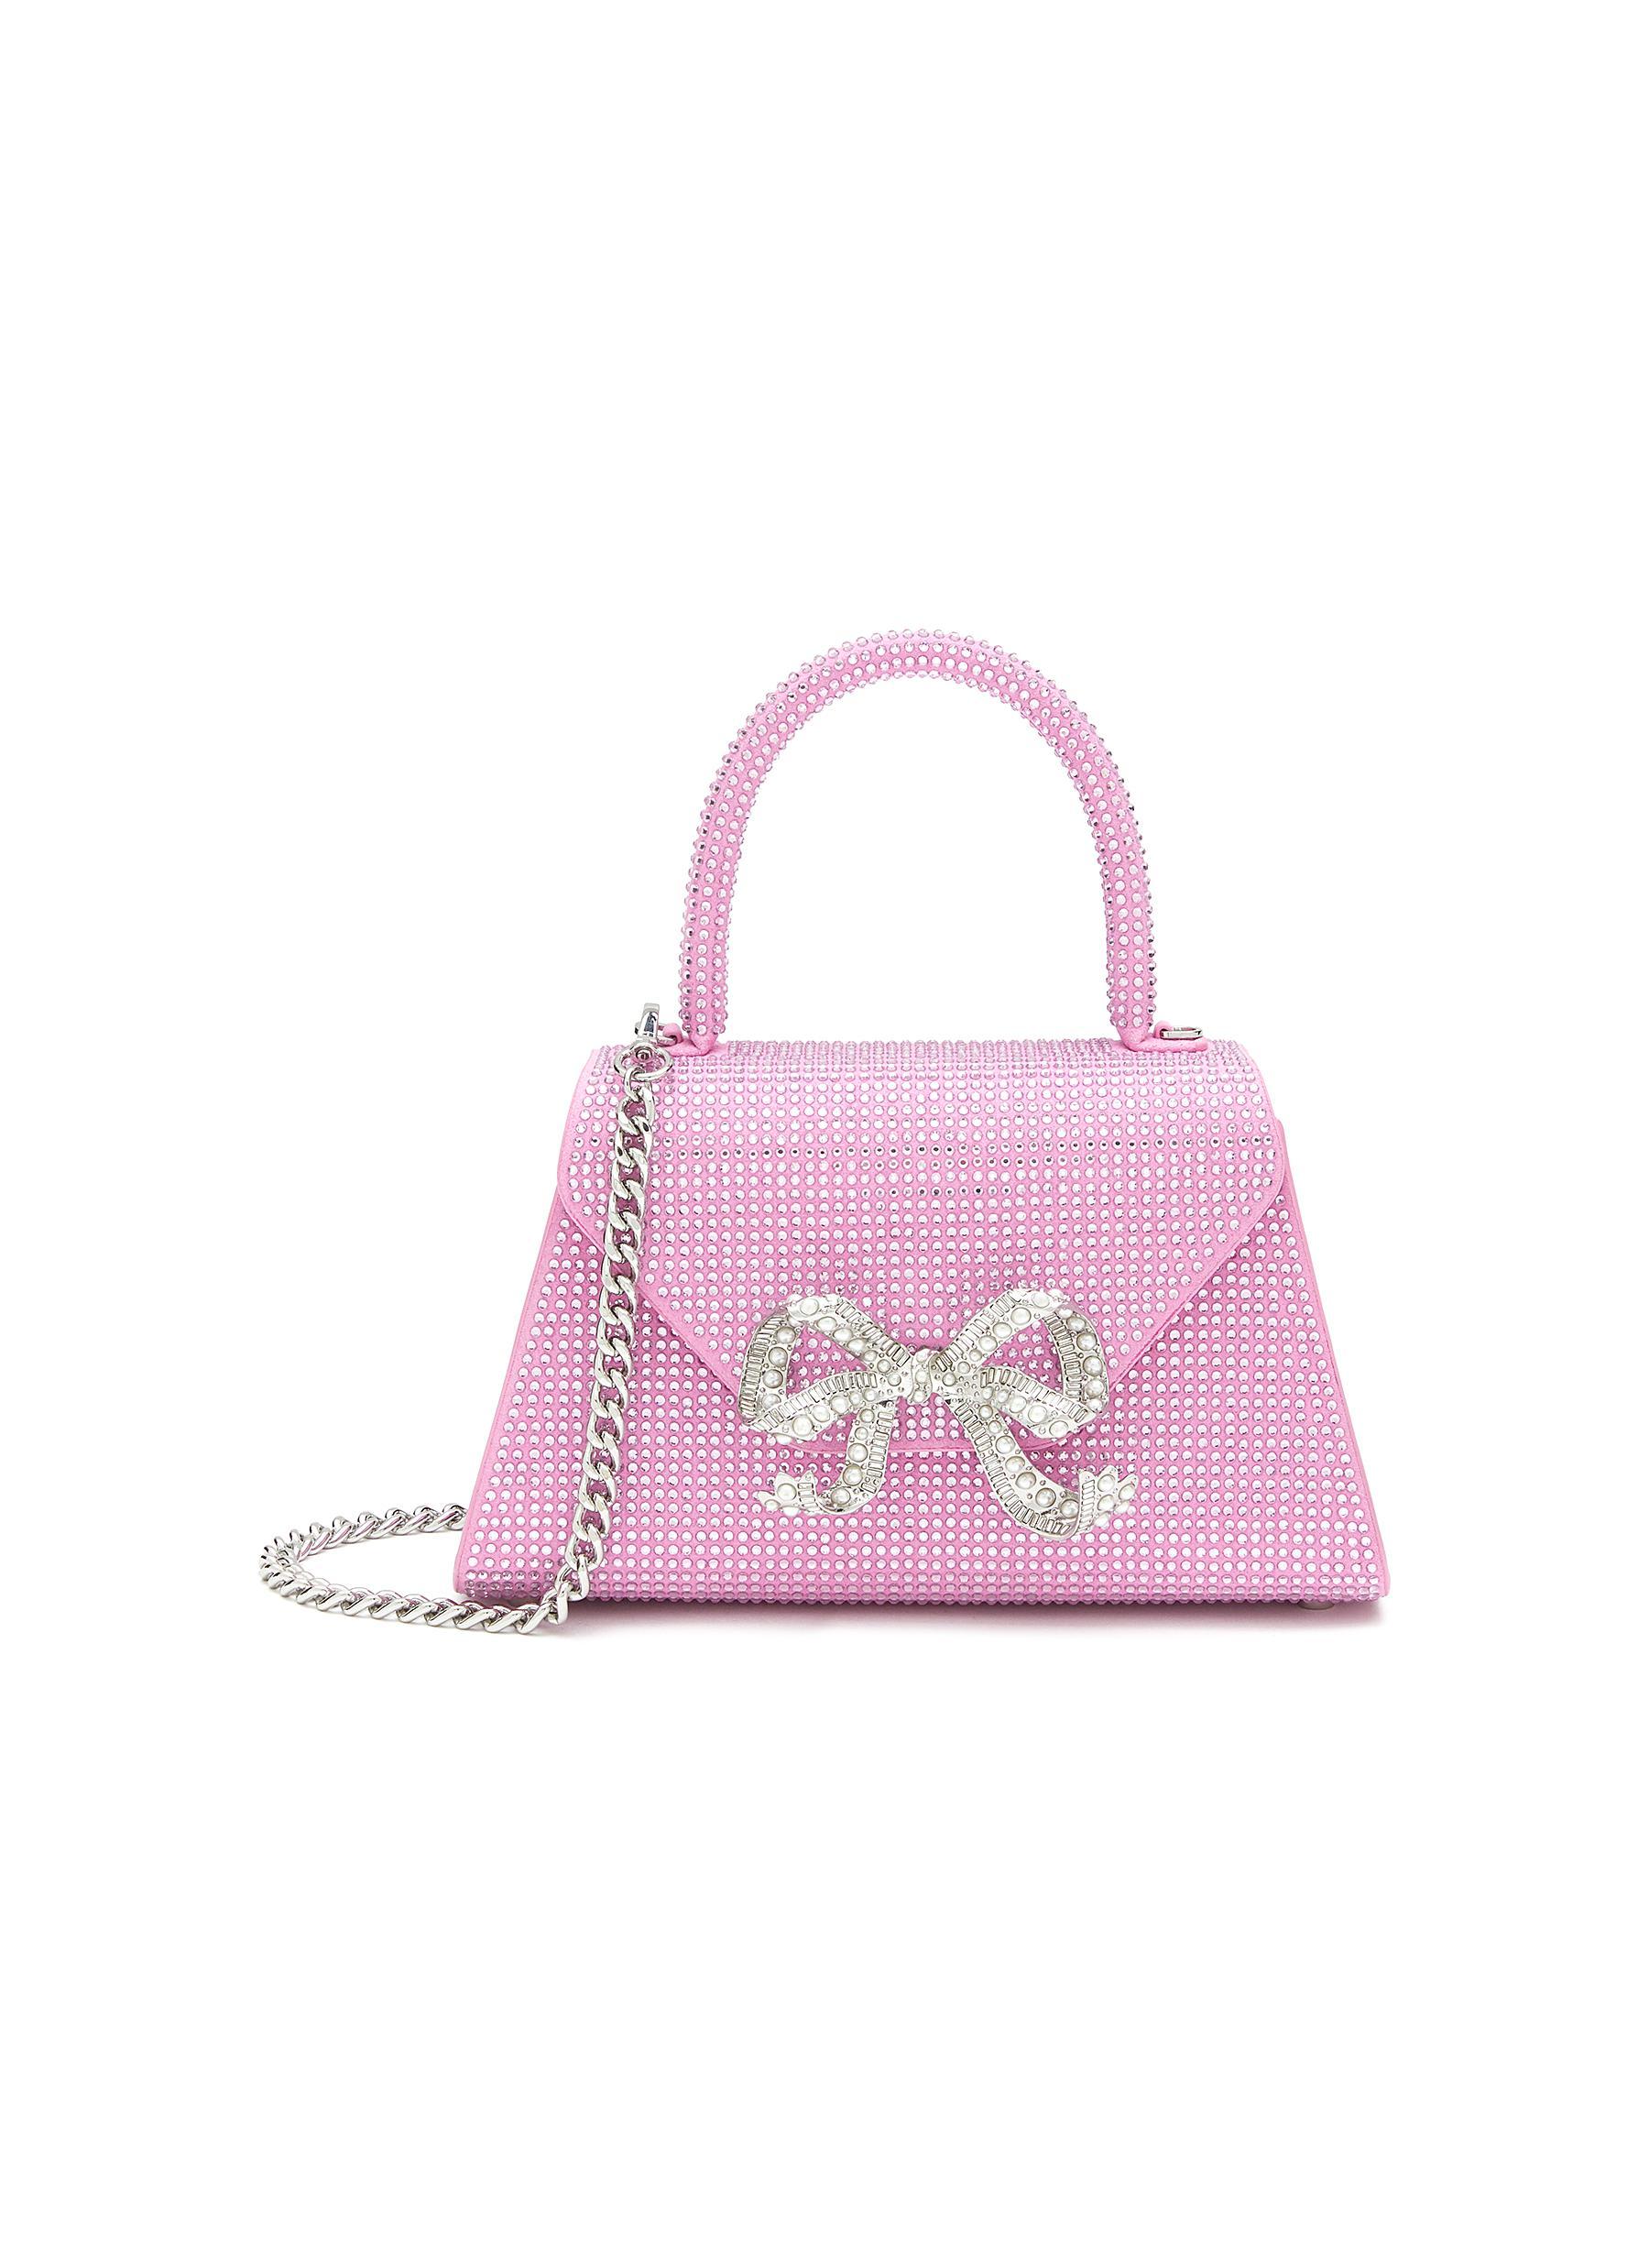 LRYBSA Wedding Party Rhinestone shoulder bag rose clasp crystal clutch cute pink  Purses for lady's Evening Handbags: Handbags: Amazon.com